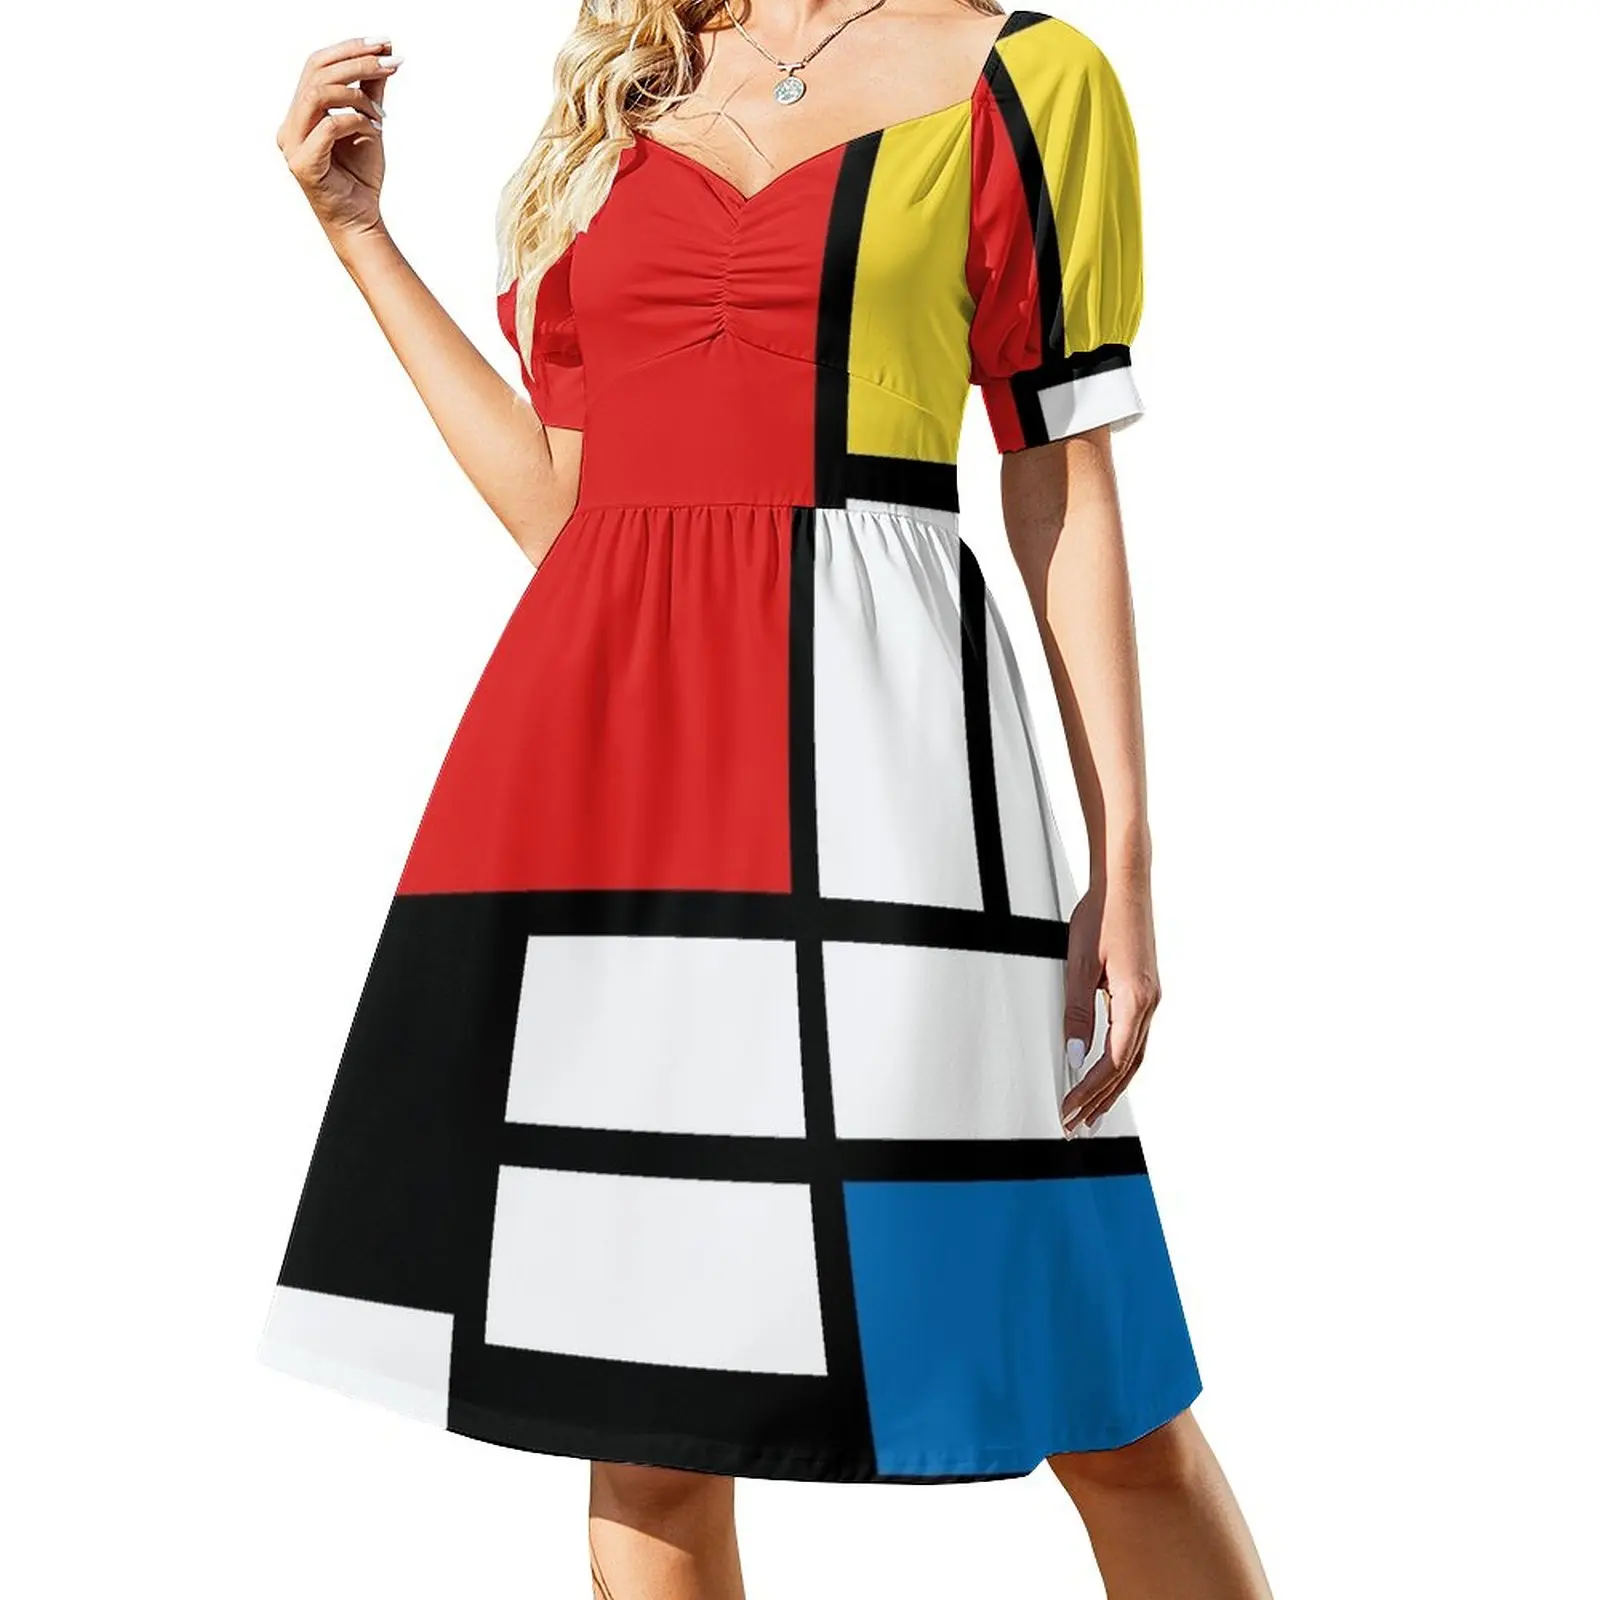 My Mondrian Dress Elegant gowns women's summer jumpsuit Long dress woman elegant dresses plus sizes